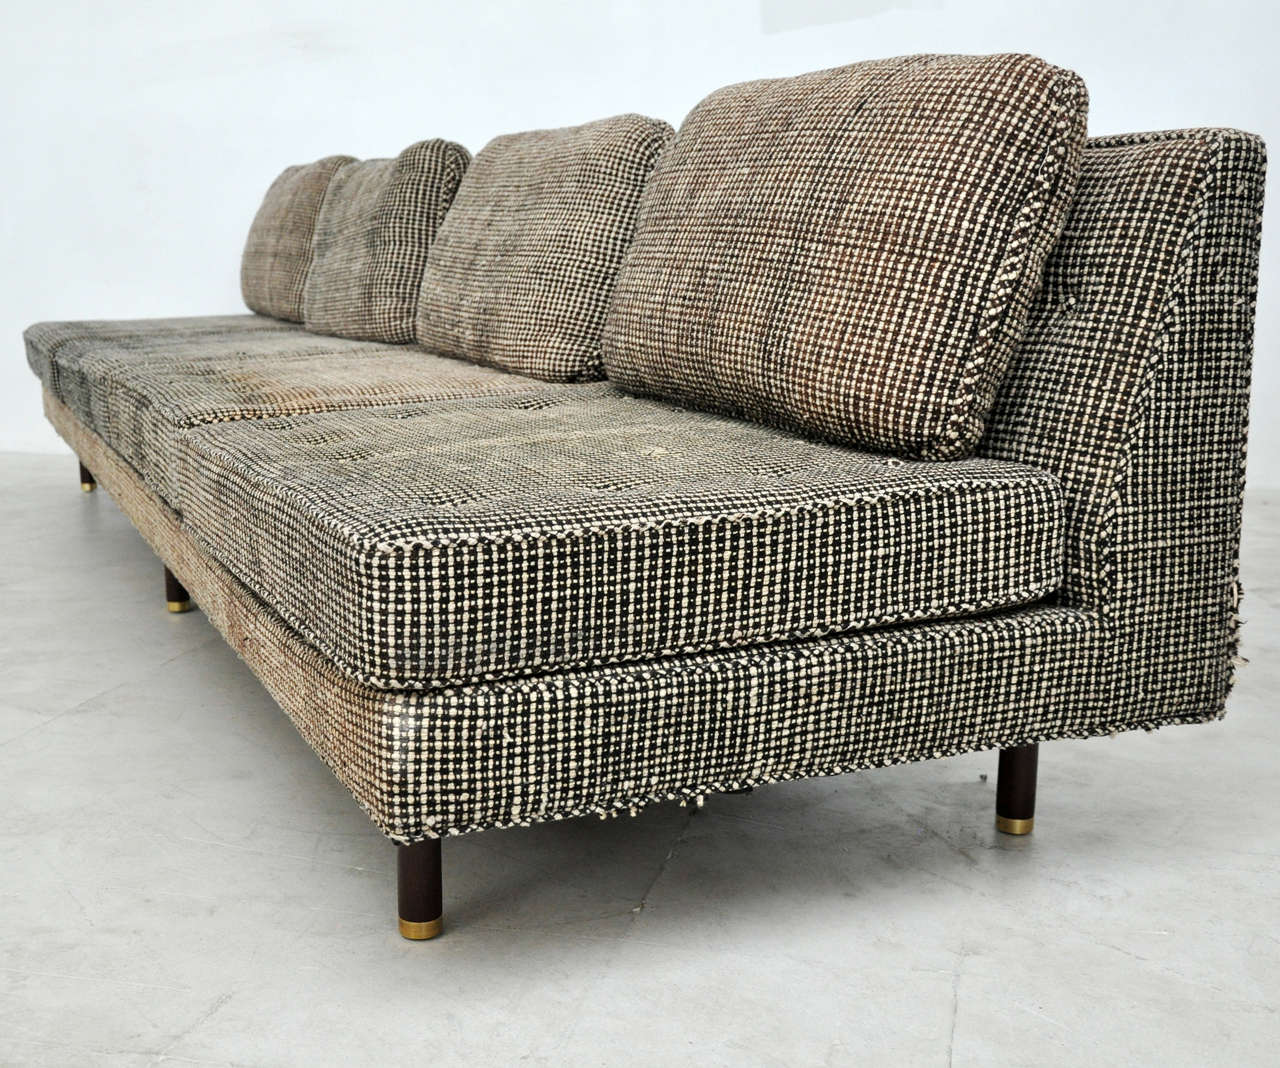 Mahogany Long Sofa Designed by Edward Wormley for Dunbar